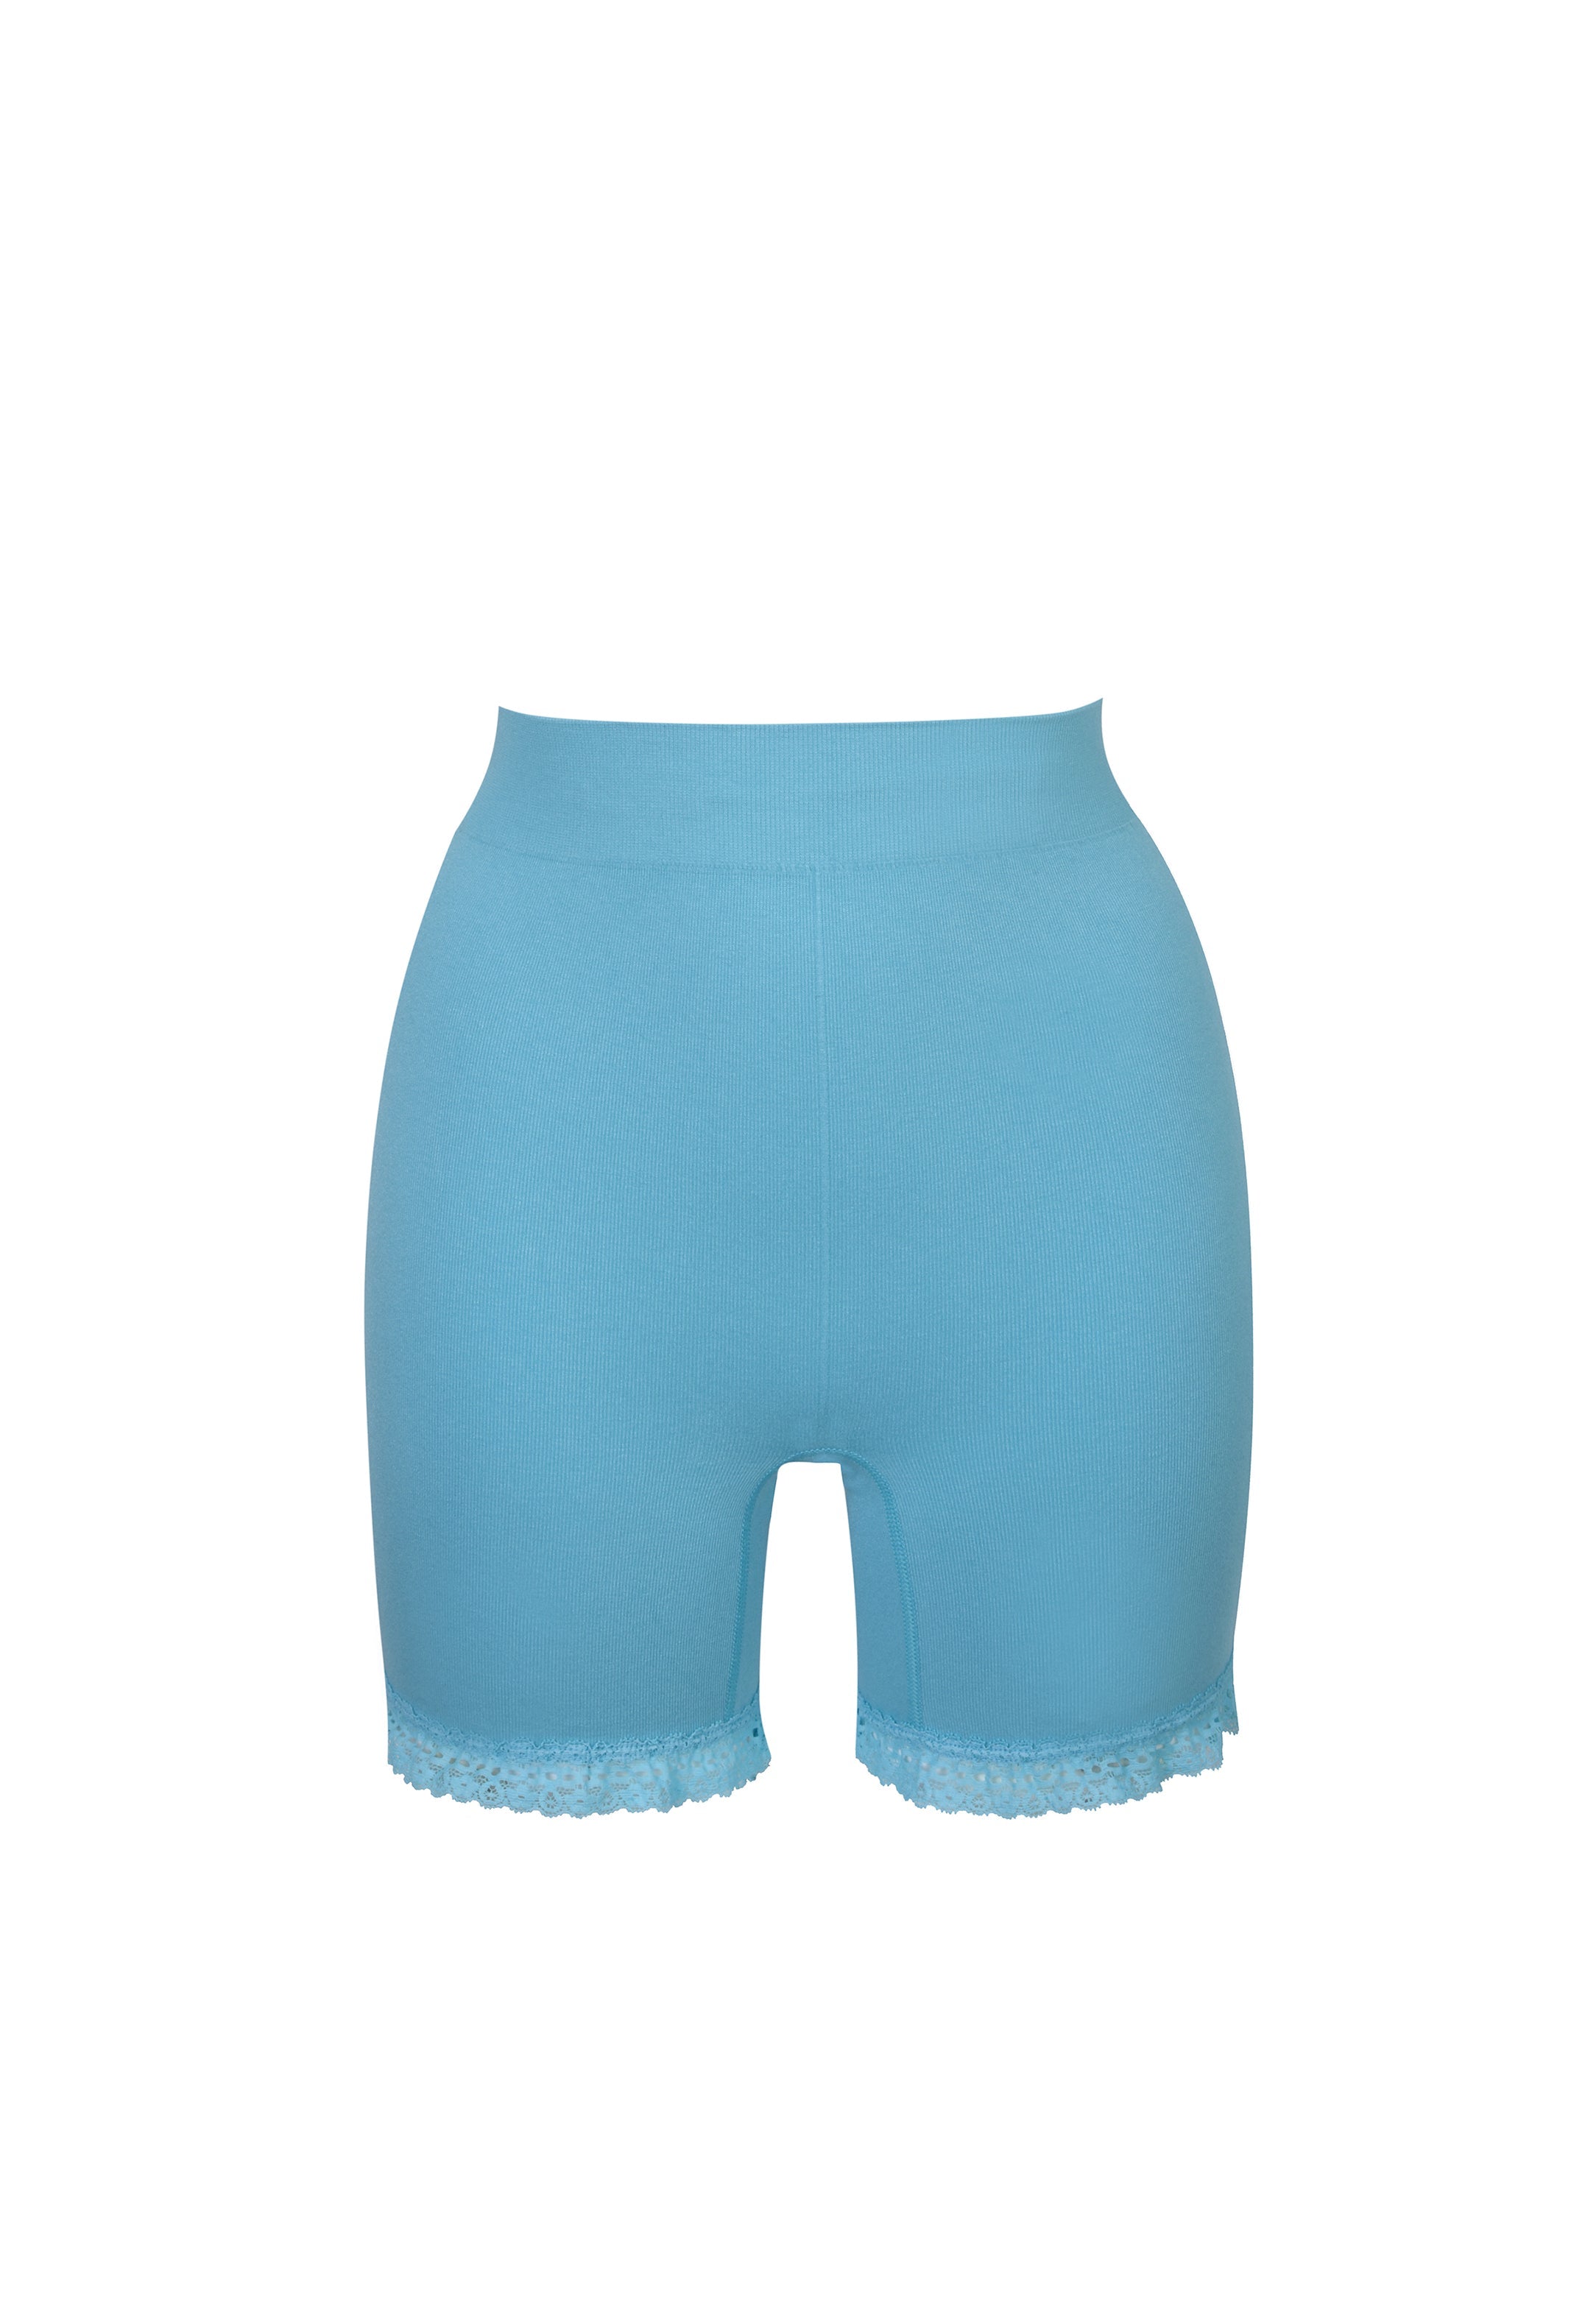 Ocean Blue Seamless Shorts